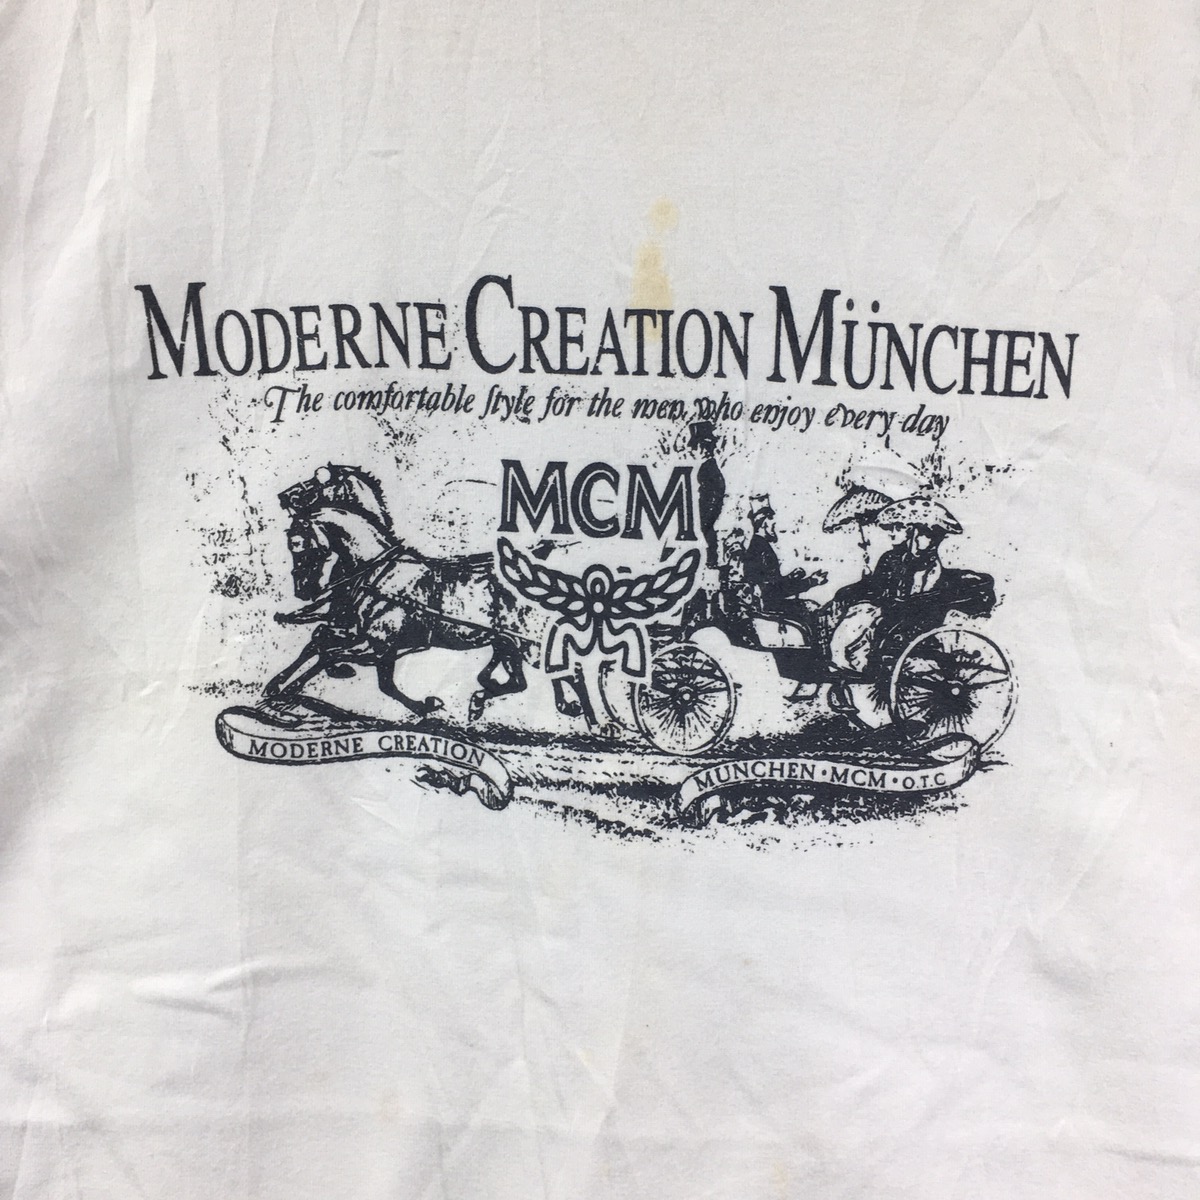 MCM OTC Moderne Creation Muchen Tee Shirt Over The Counter - 3